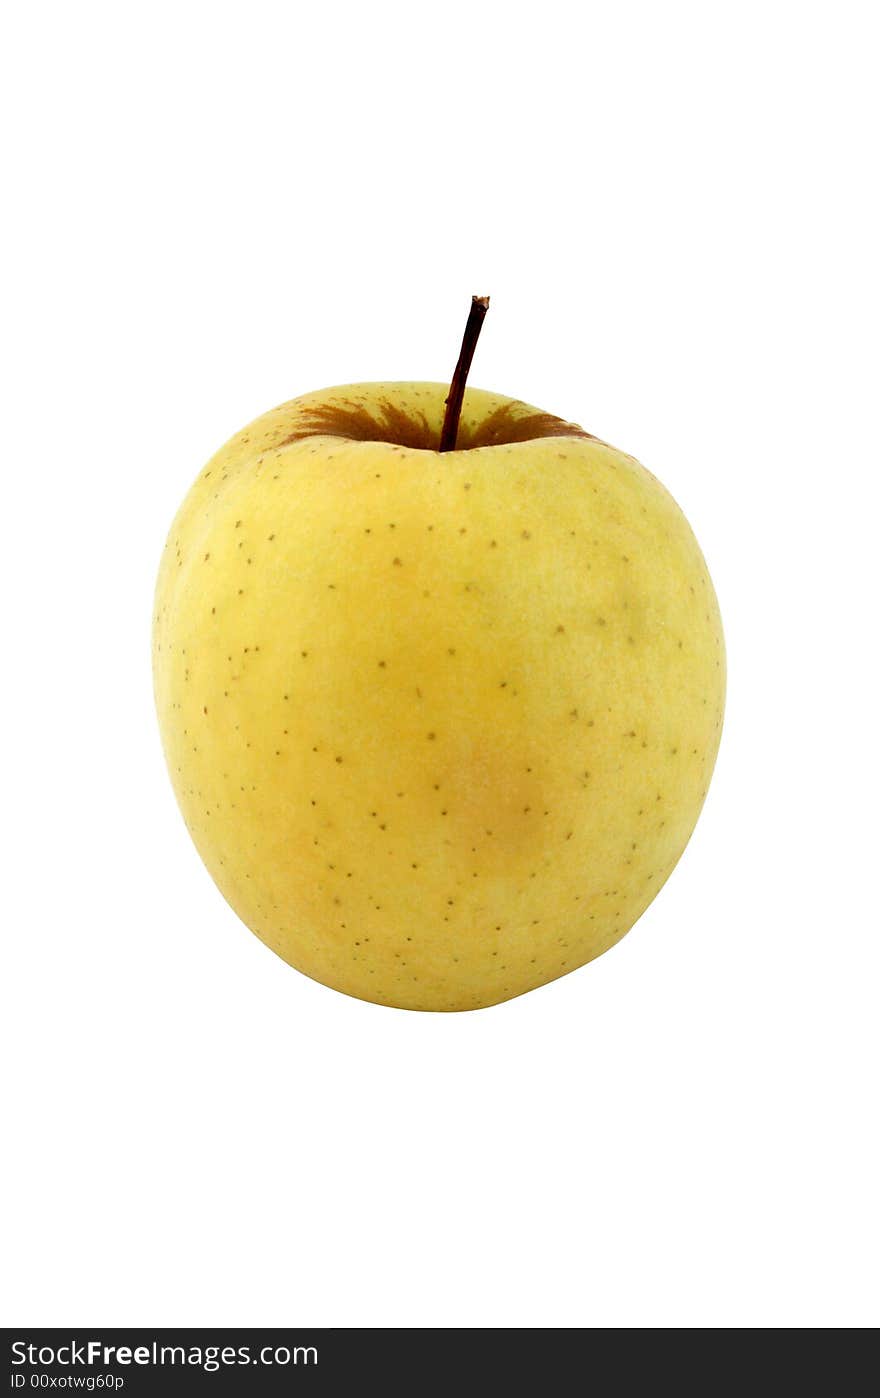 Big yellow apple isolated over white